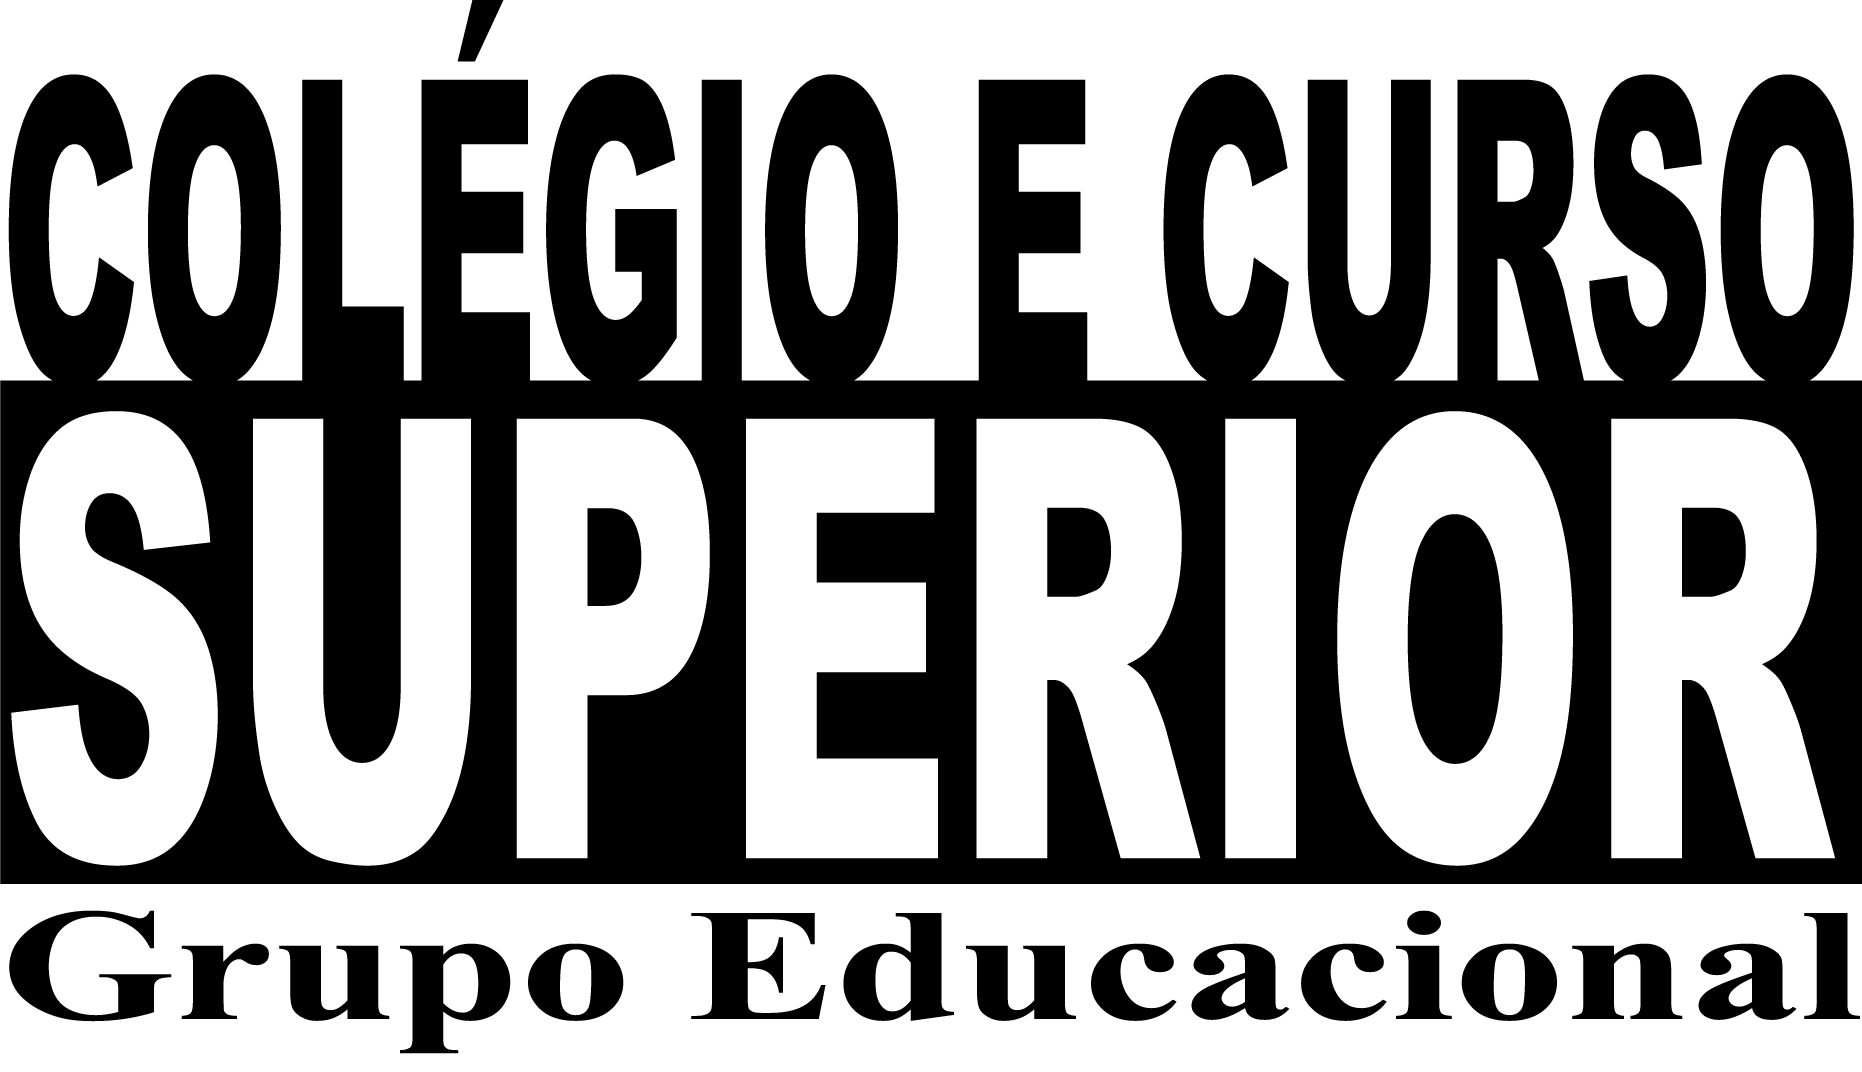 Colégio e Curso Supeior - Grupo Educacional